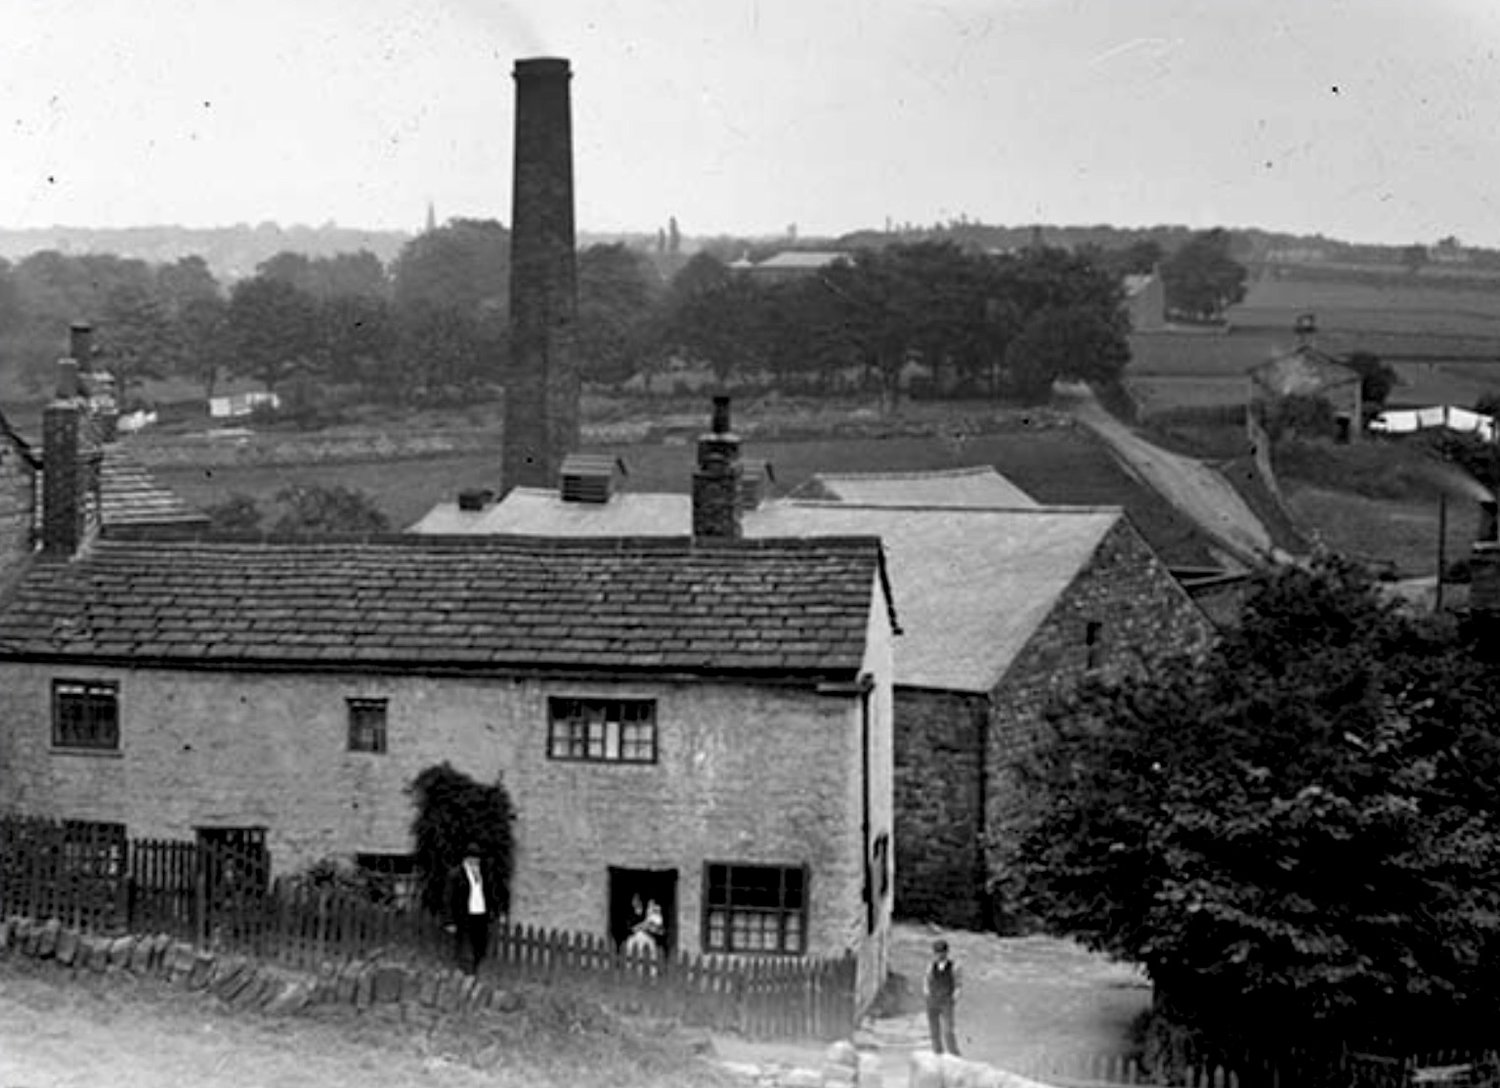 22  Woodland Dye Works (formerly Old Oil Mill) (demolished), c1890